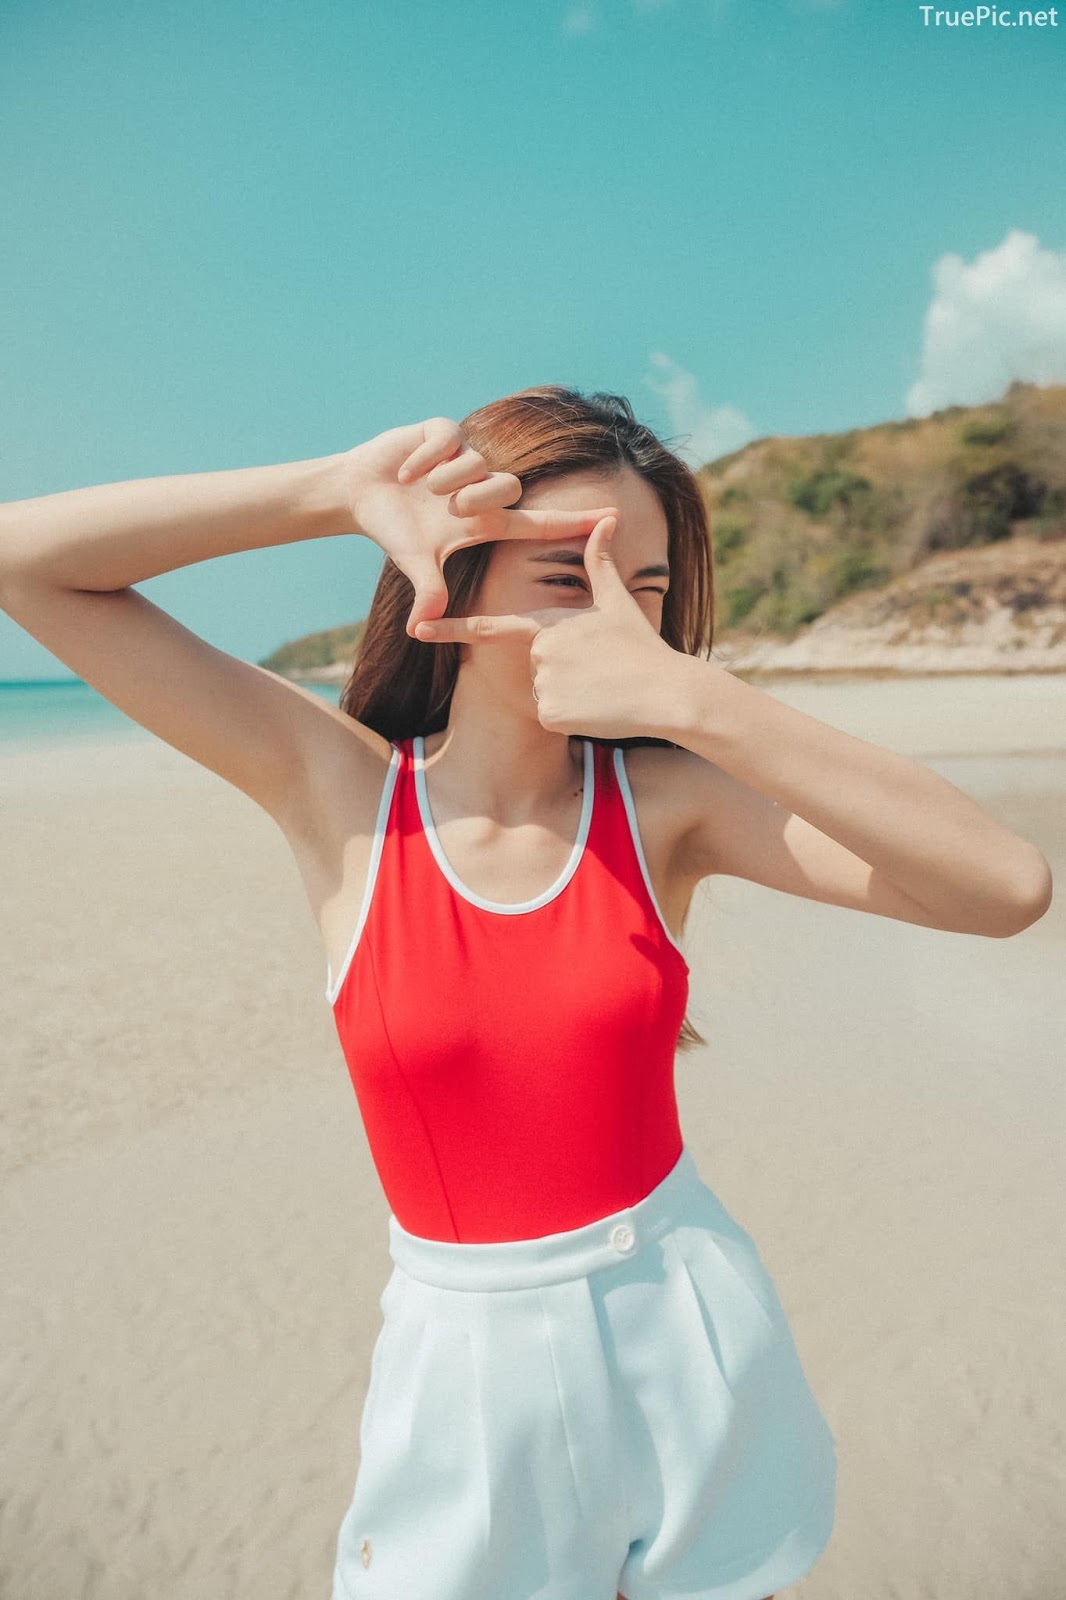 Miss Teen Thailand - Kanyarat Ruangrung - The Red Monokini On The Beach - TruePic.net - Picture 24